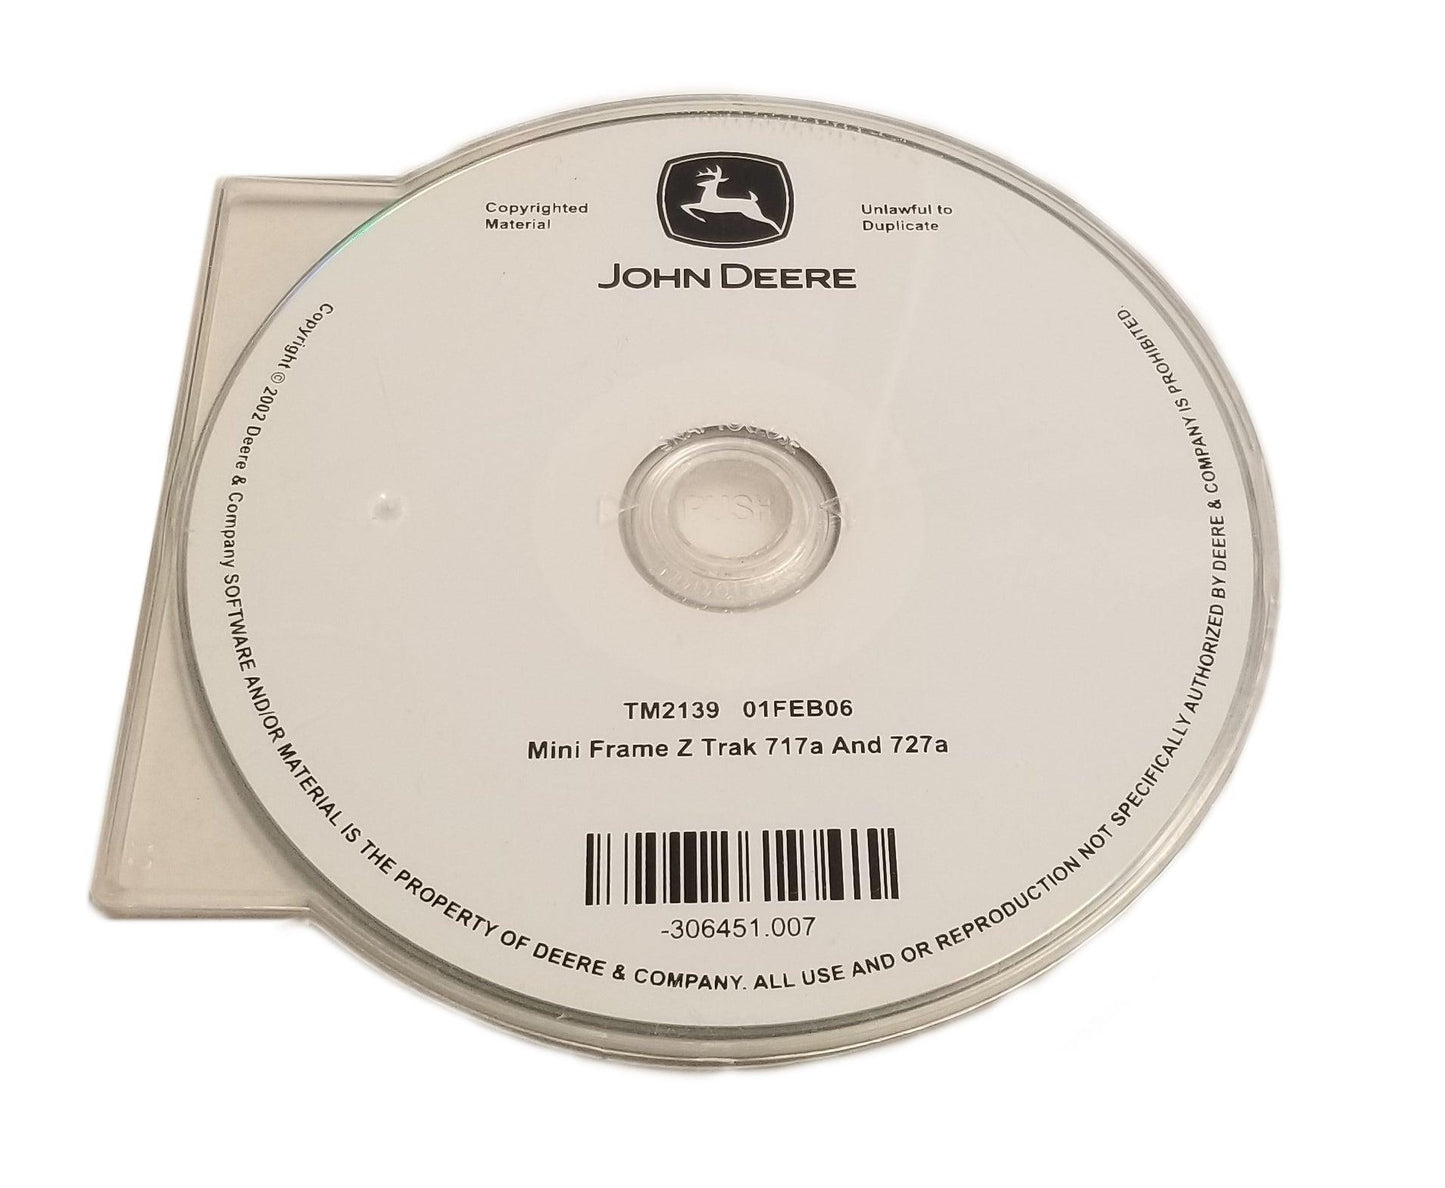 John Deere 717A/727A Mini-Frame Z Trak Technical Manual CD - TM2139CD